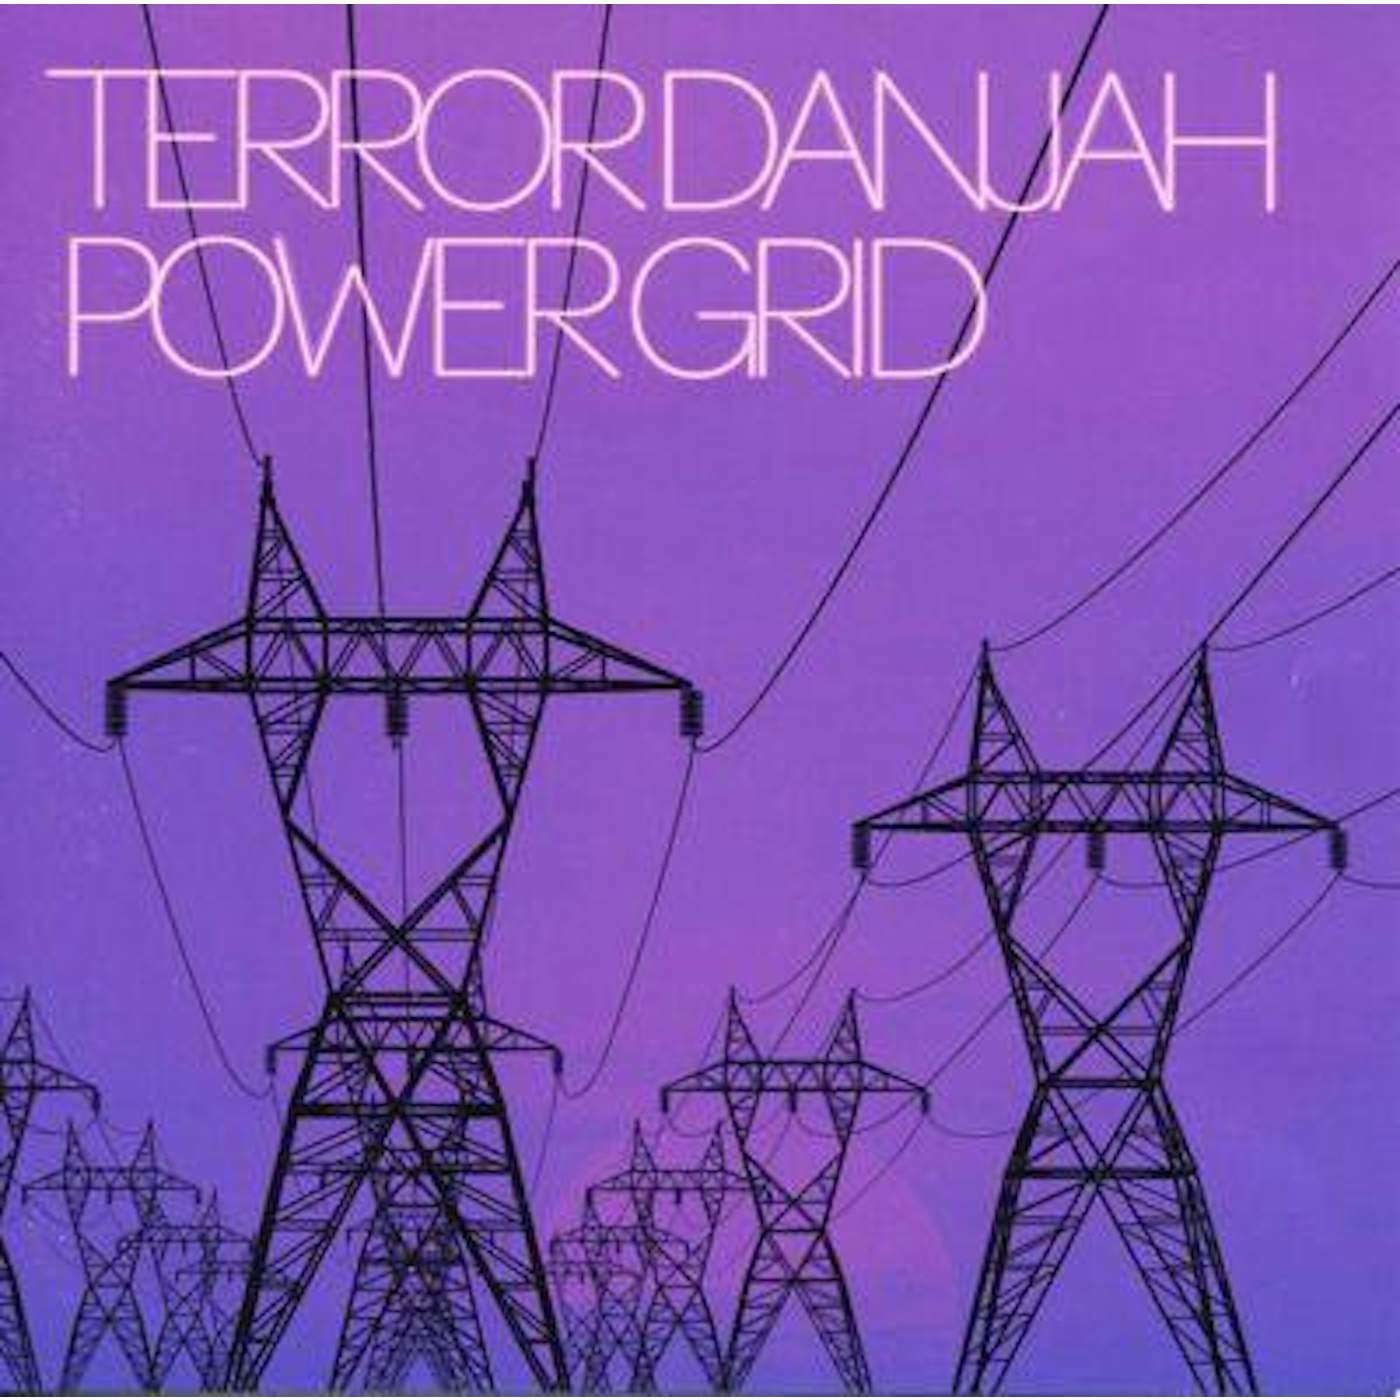 Terror Danjah 'Power Grid' Vinyl Record